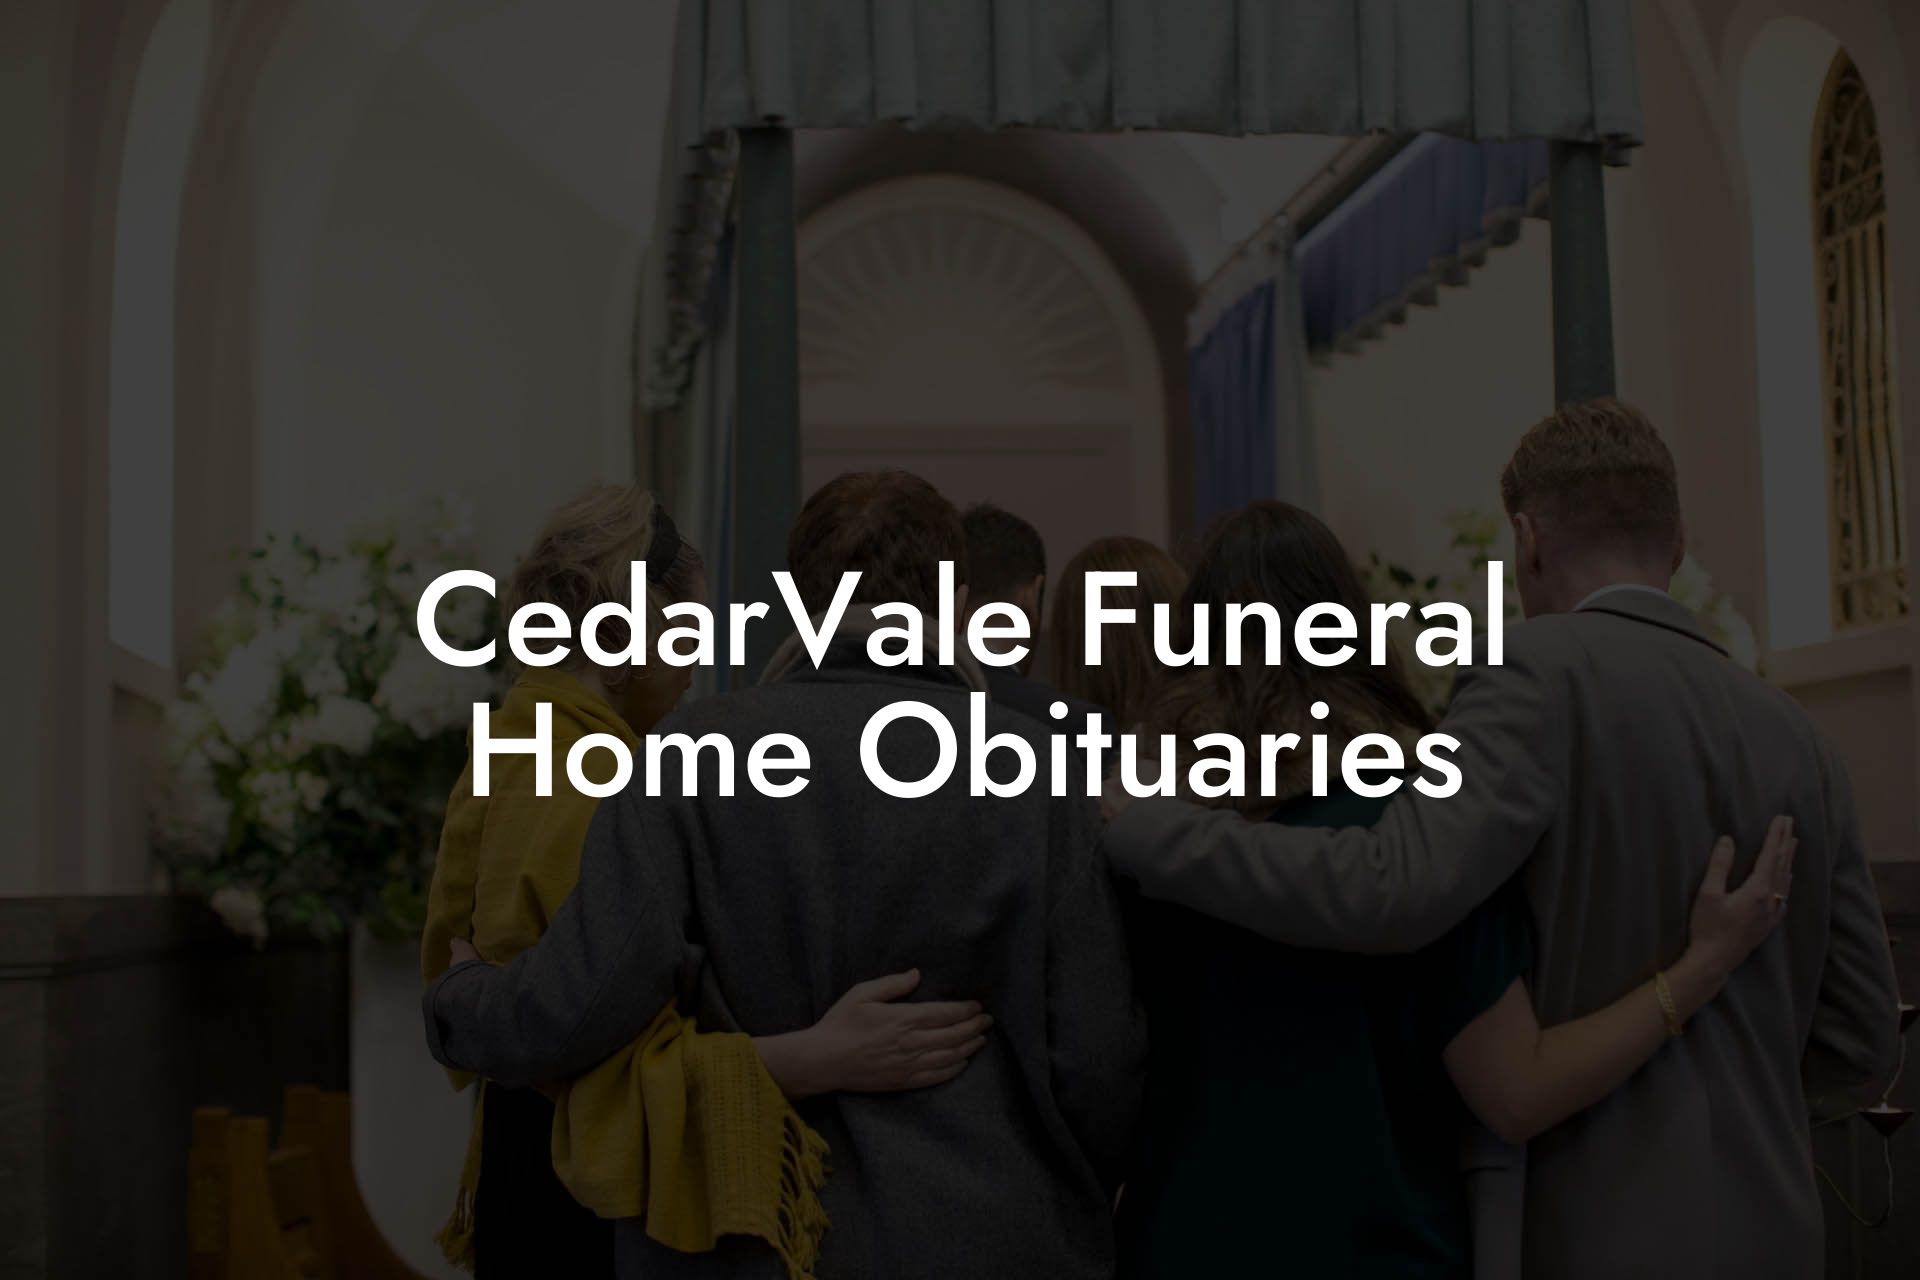 CedarVale Funeral Home Obituaries